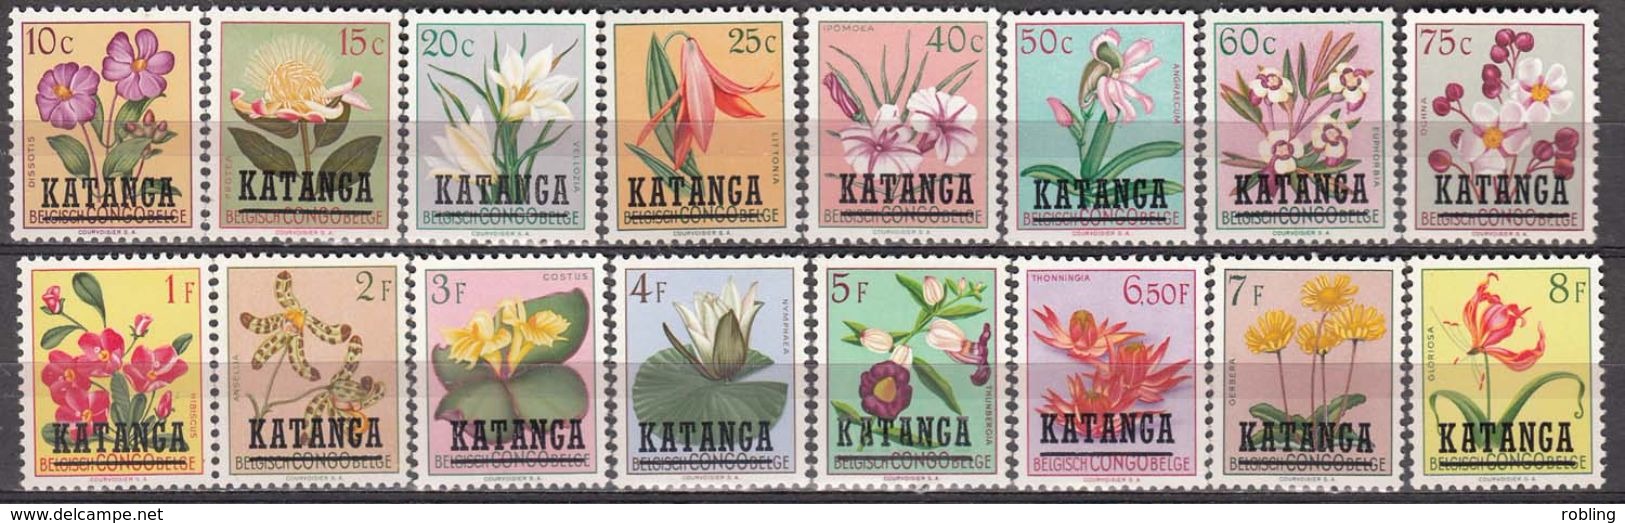 Congo.Katanga.1960.Orchids. Michel.23-38. MNH.24229 - Orchideeën